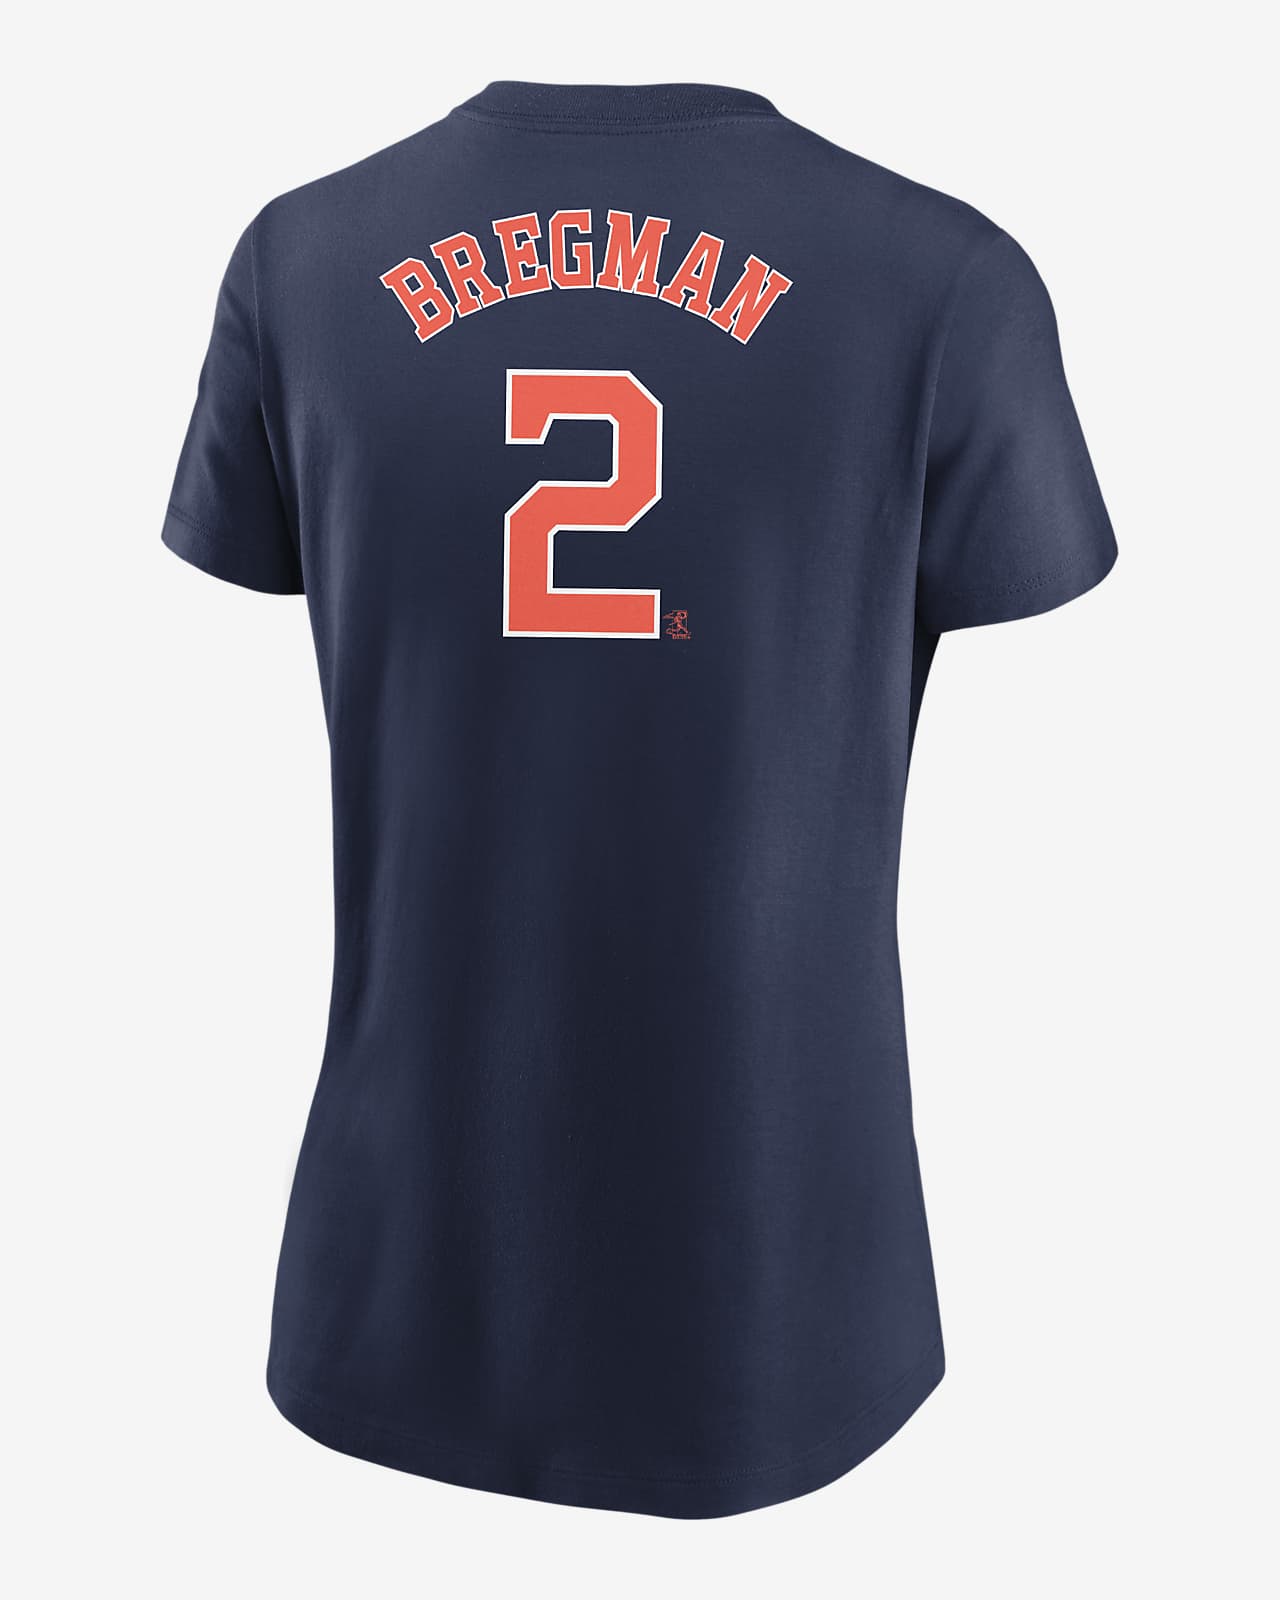 alex bregman jersey number